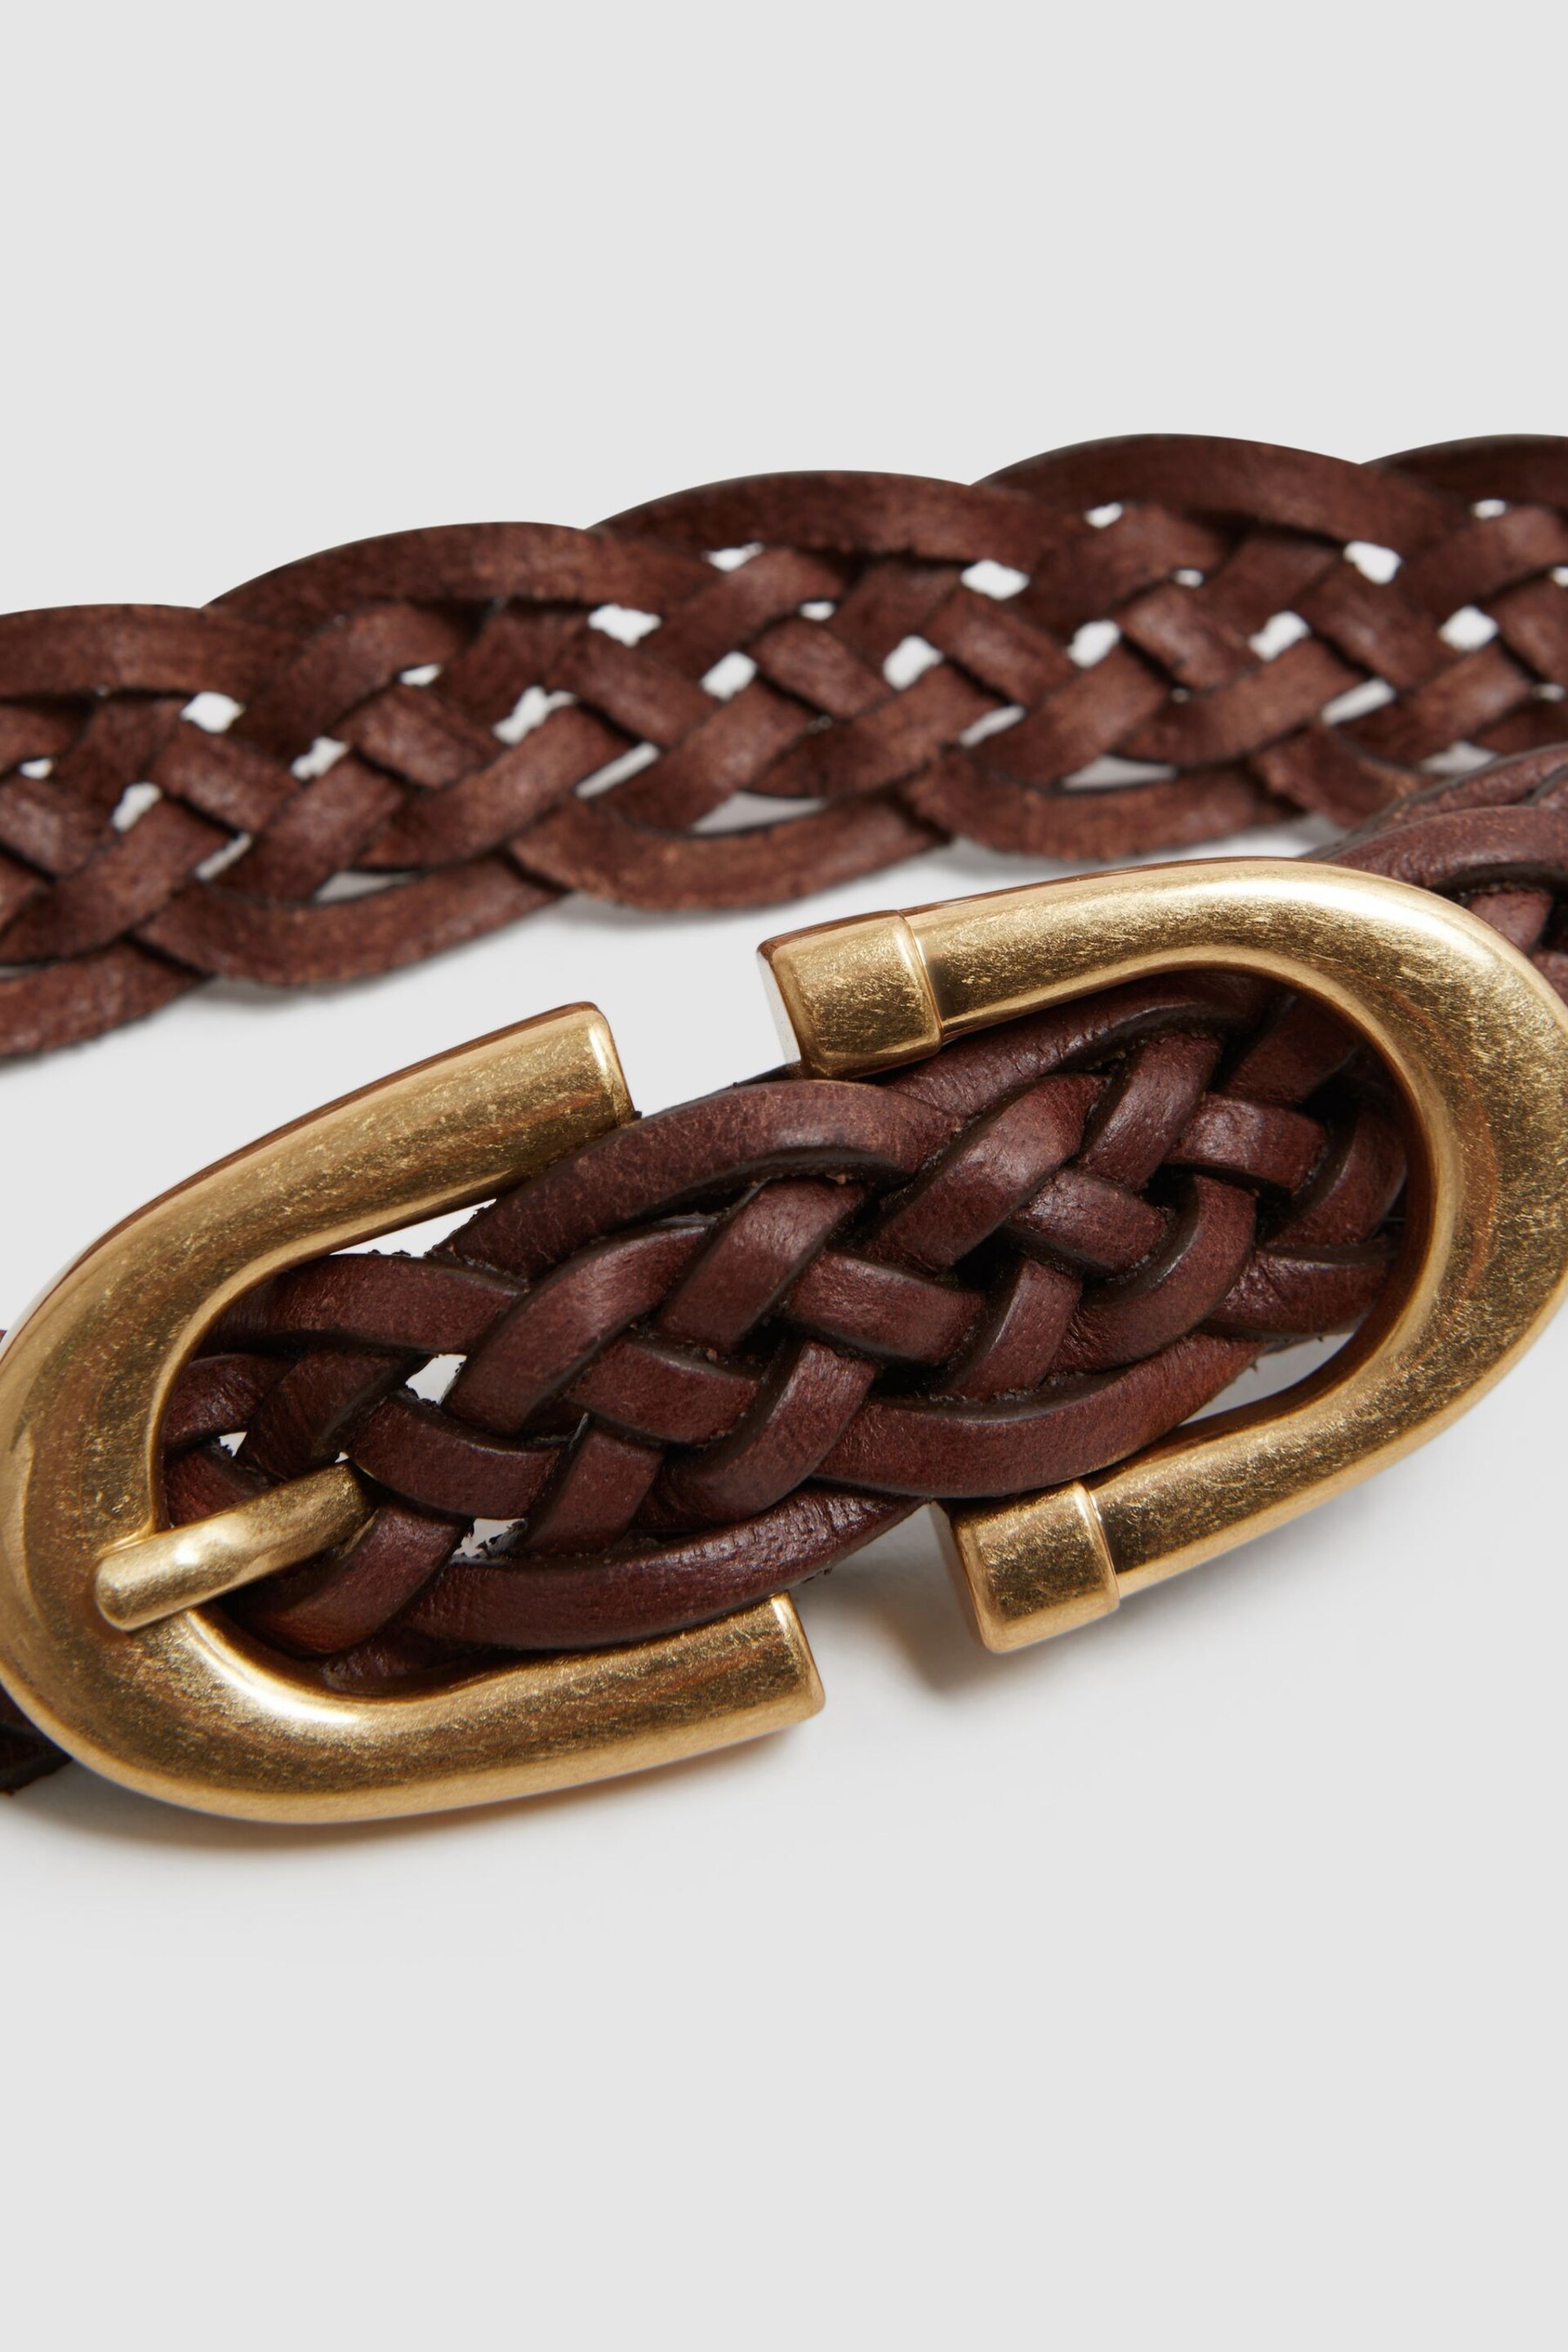 Reiss Tan Bailey Woven Leather Horseshoe Belt - Image 4 of 4